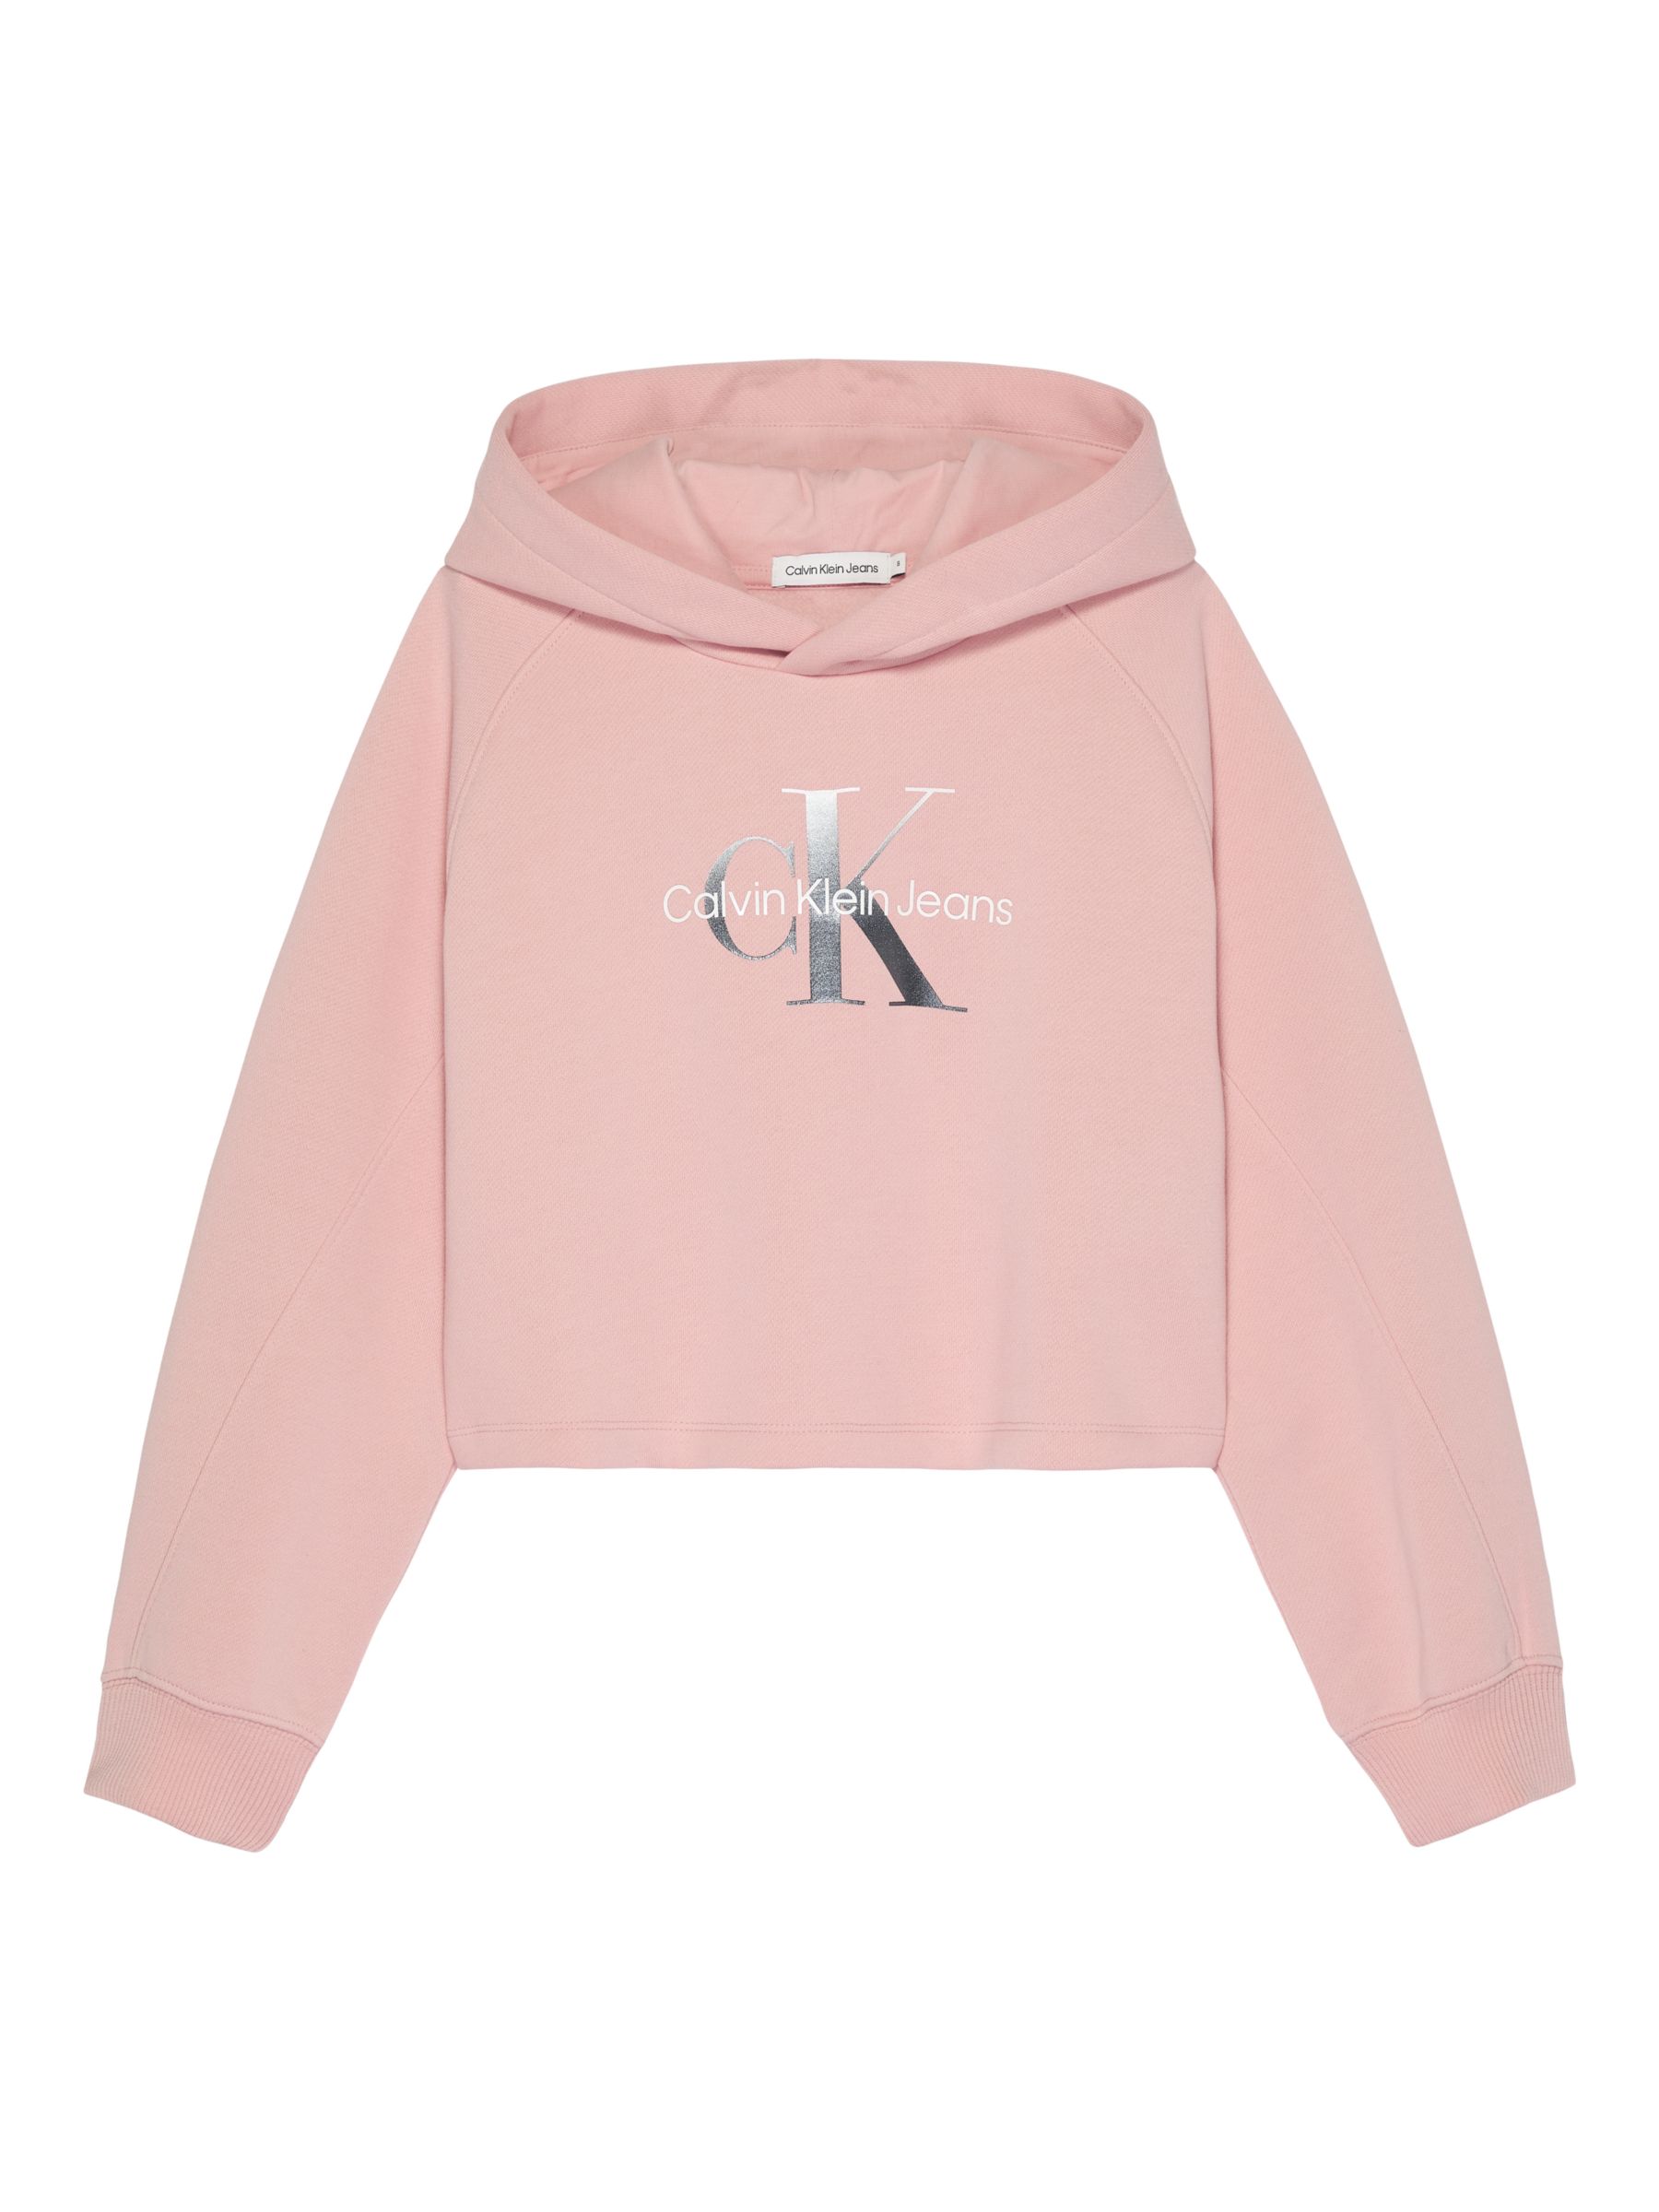 Rechtdoor Maladroit Conciërge Calvin Klein Kids' Signature CK Monogram Logo Hoodie, Pink Blush